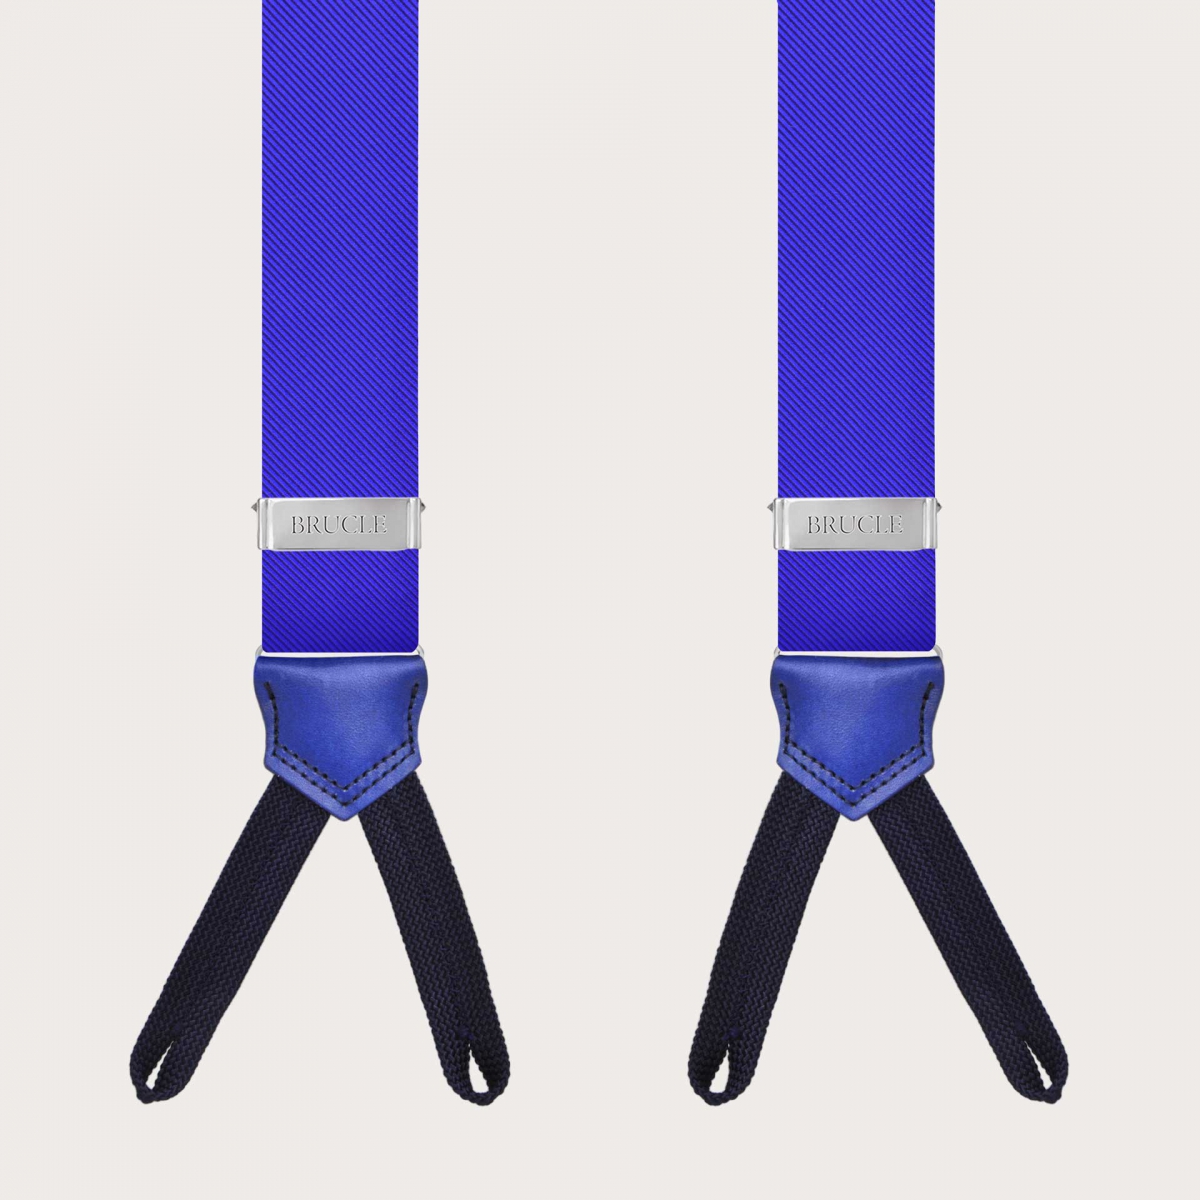 Hosenträger-Konfigurator mit gestreiften Seiden-Trikot-Bändern in